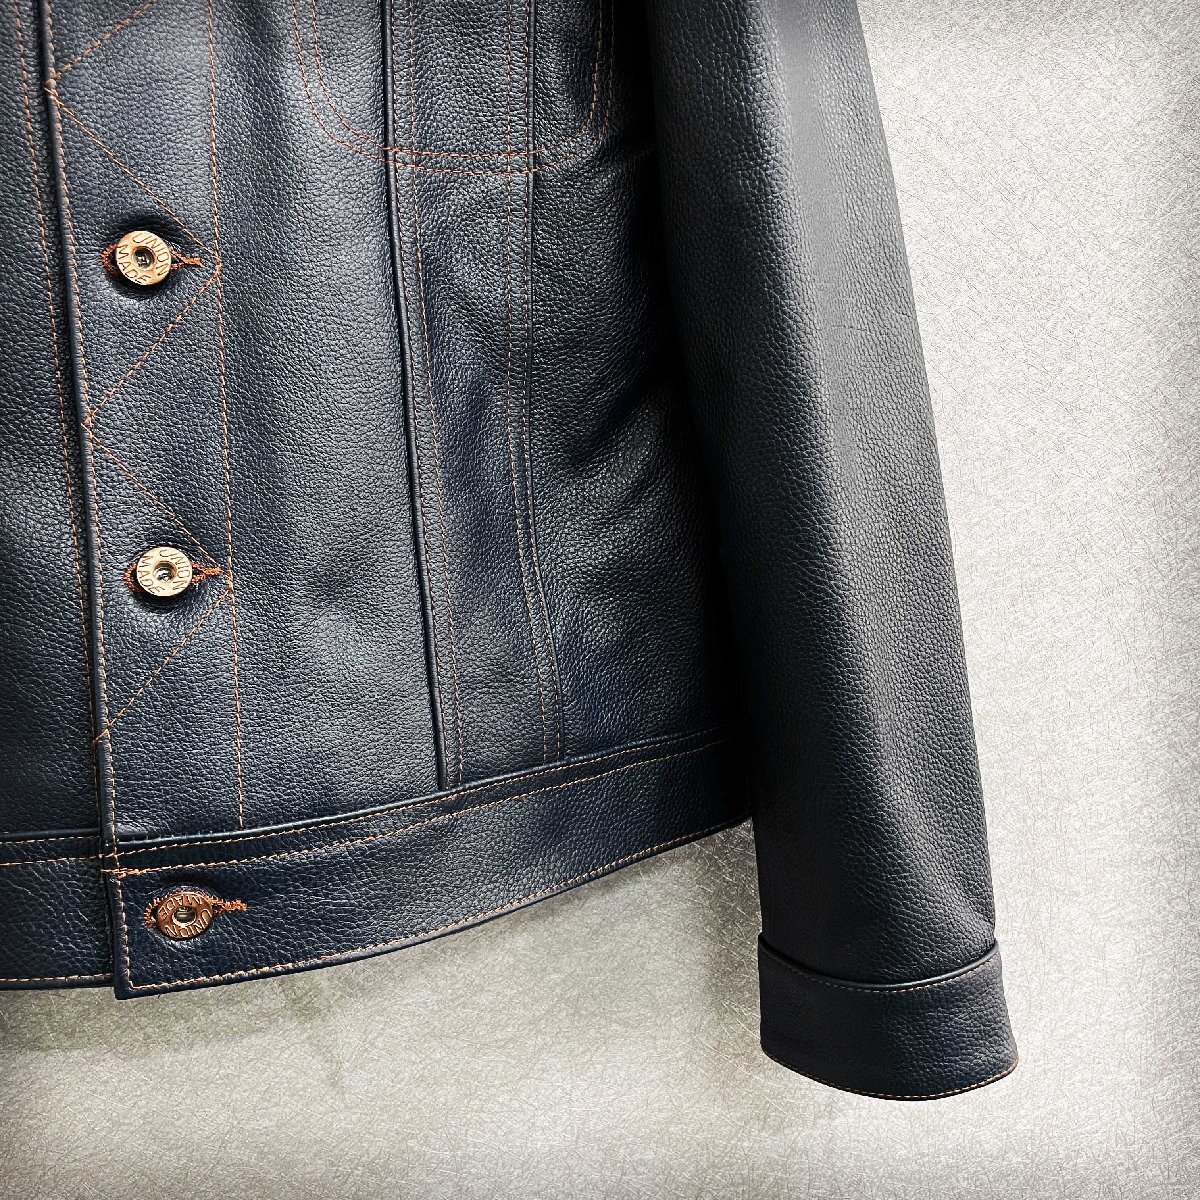  piece .* leather jacket regular price 15 ten thousand *Emmauela* Italy * milano departure * high quality cow leather rare leather jacket Rider's motorcycle L/48 size 